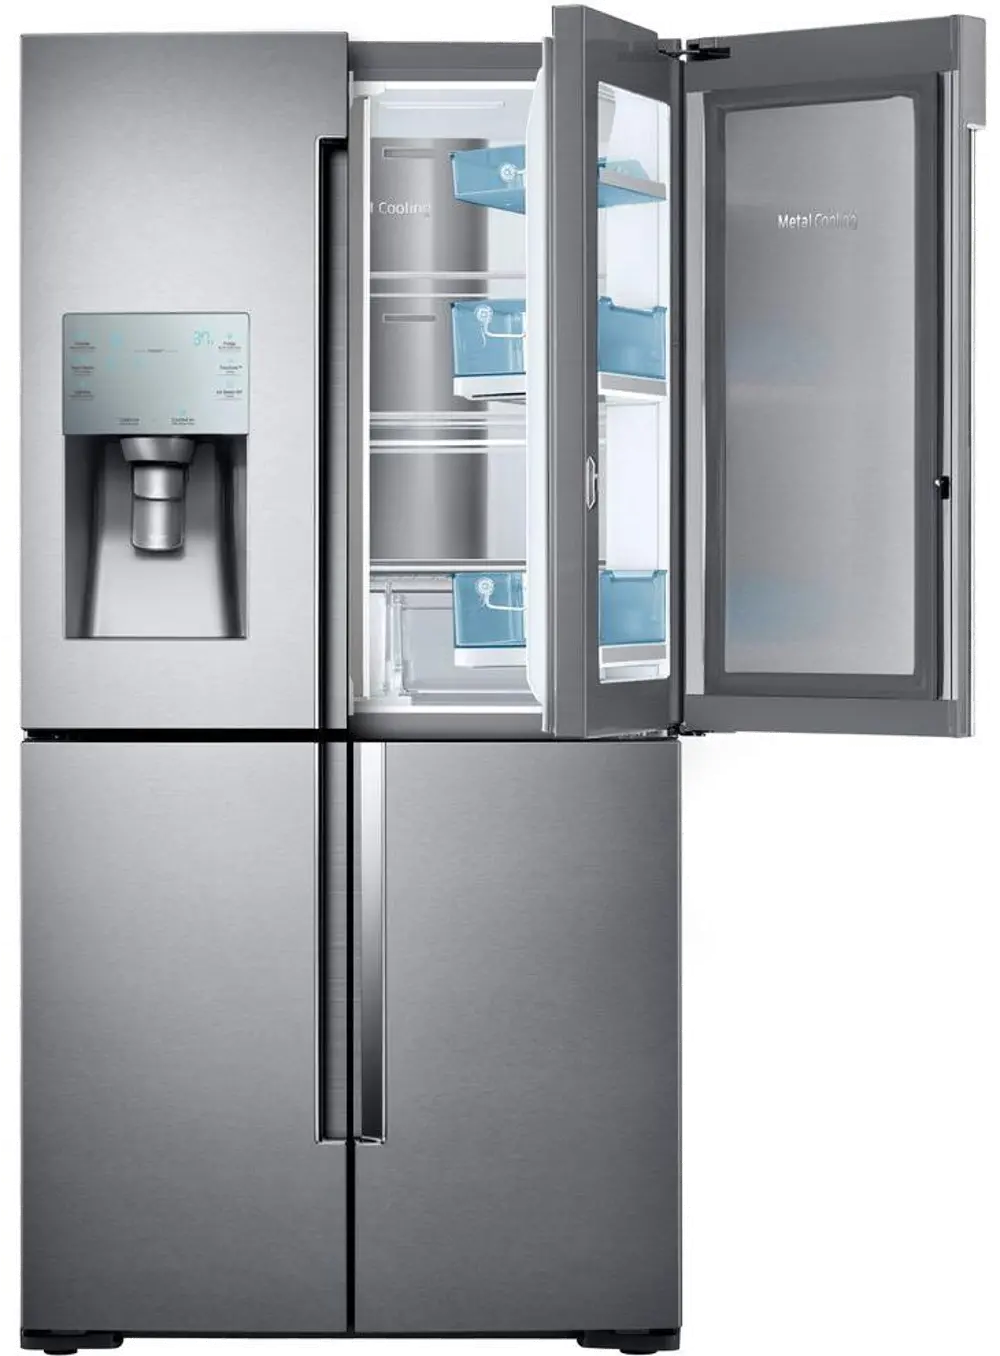 RF28K9380SR Samsung 4 Door French Door Smart Refrigerator with FoodShowcase and FlexZone - 28.0 cu. ft., 36 Inch Stainless Steel-1